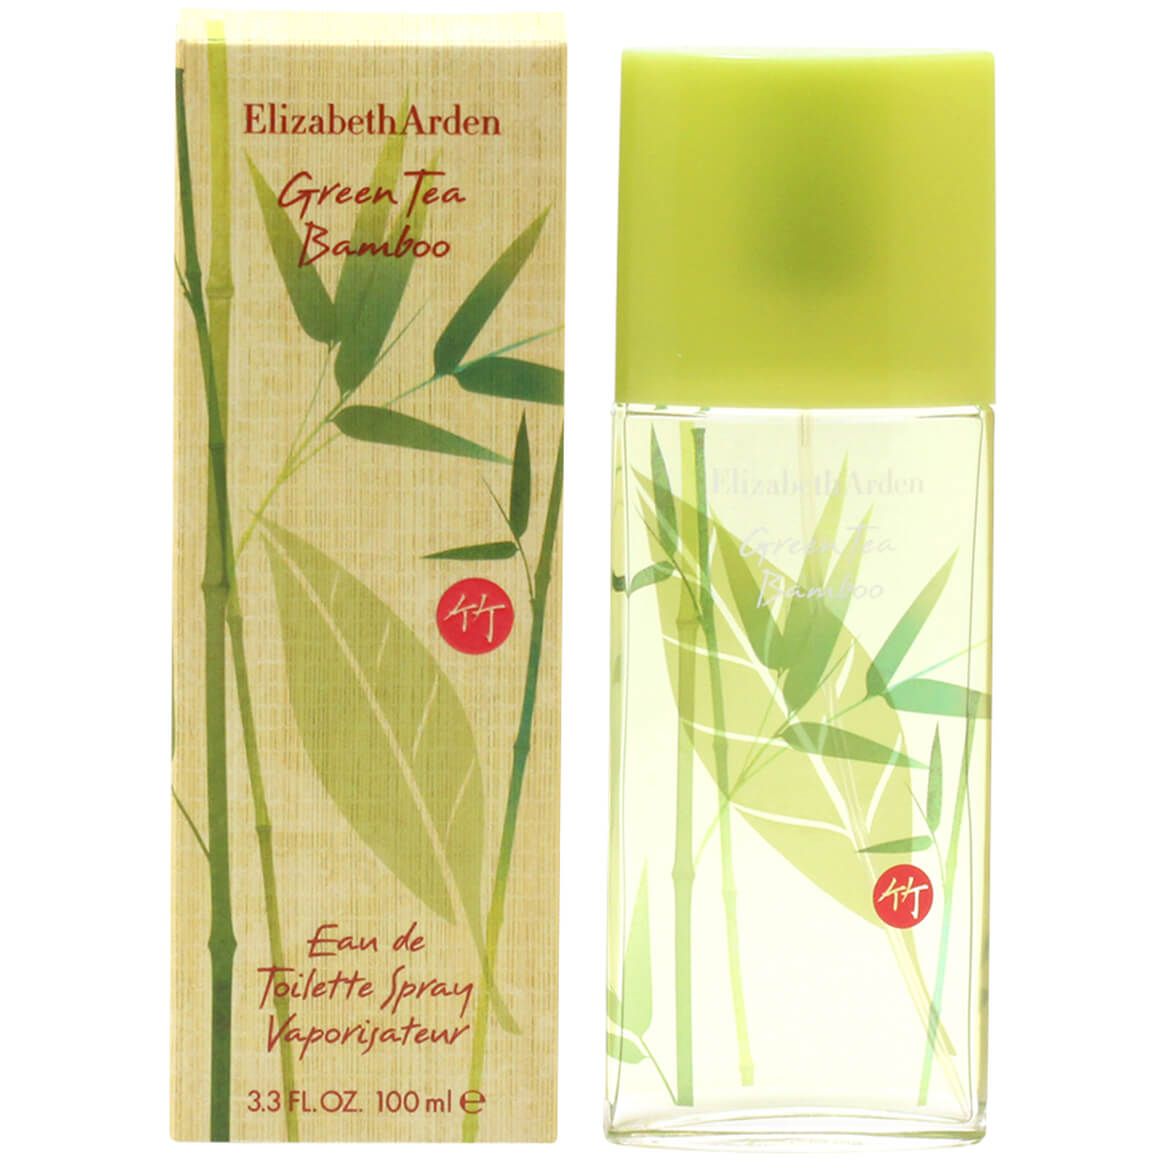 Elizabeth Arden Green Tea Bamboo for Women EDT, 3.3 oz. + '-' + 366836